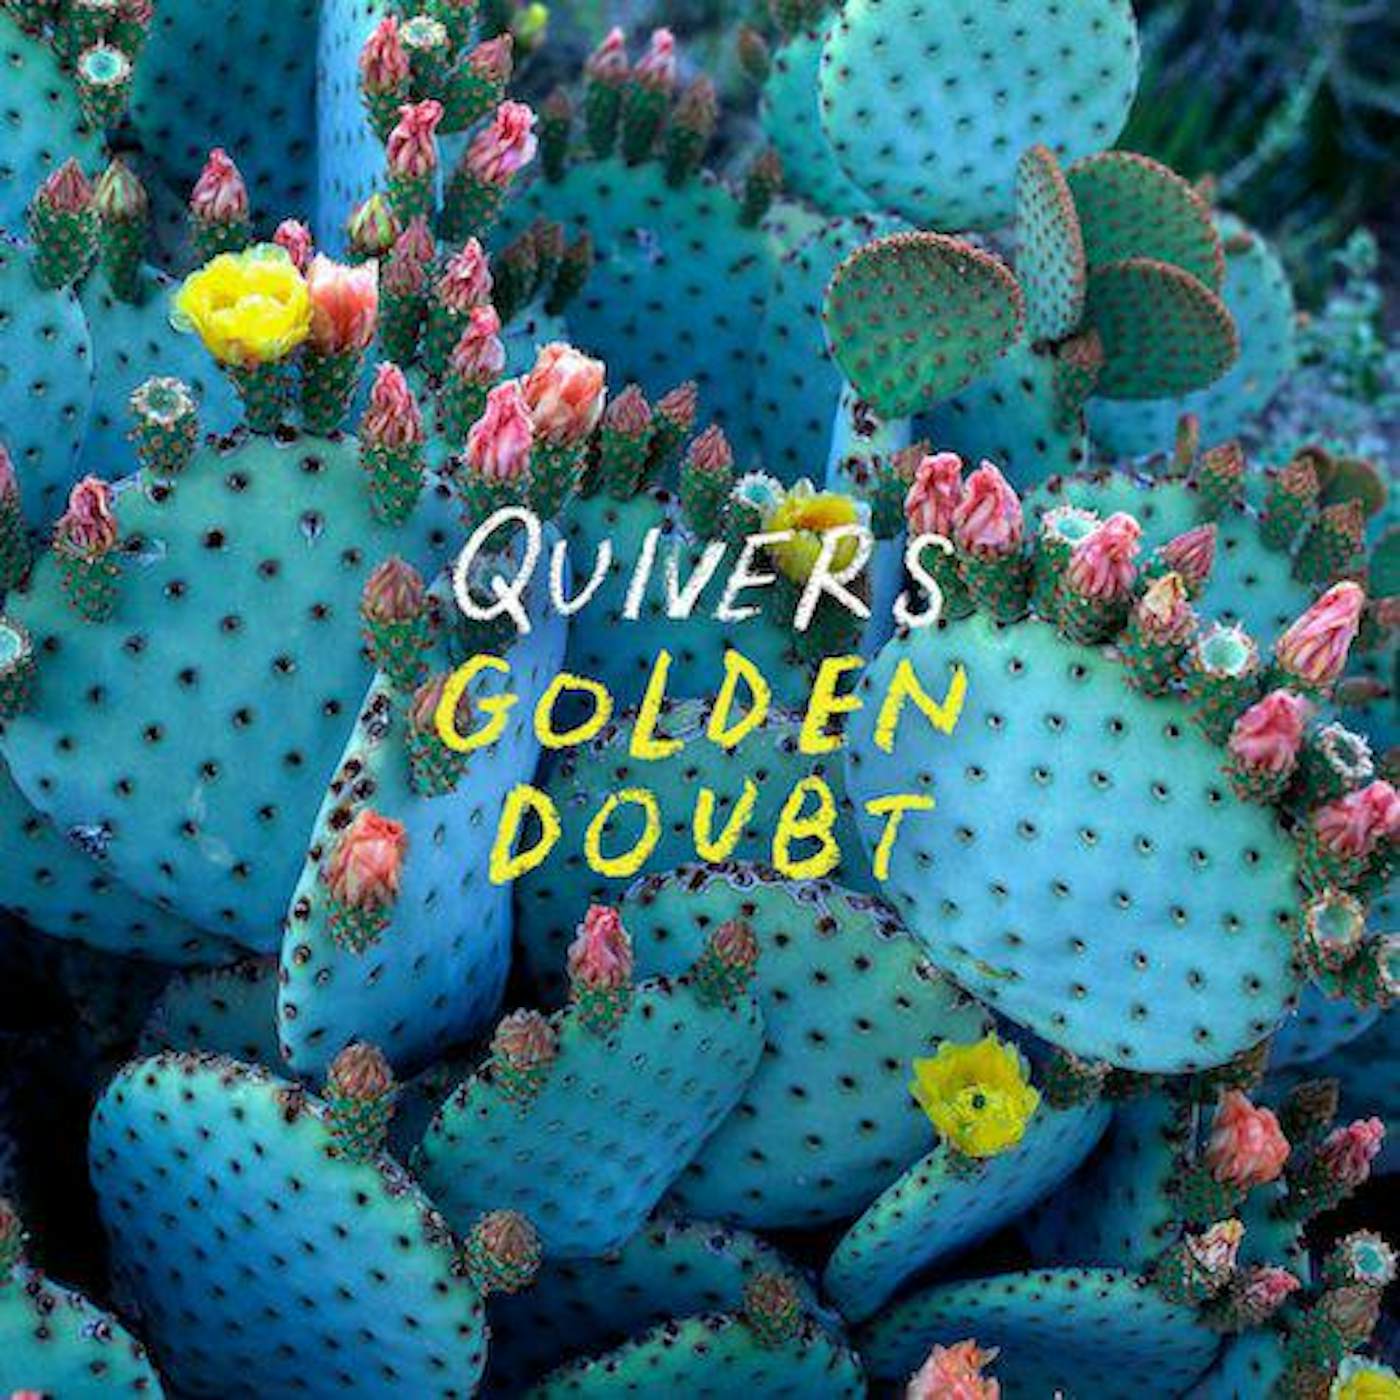 Quivers Golden Doubt Vinyl Record